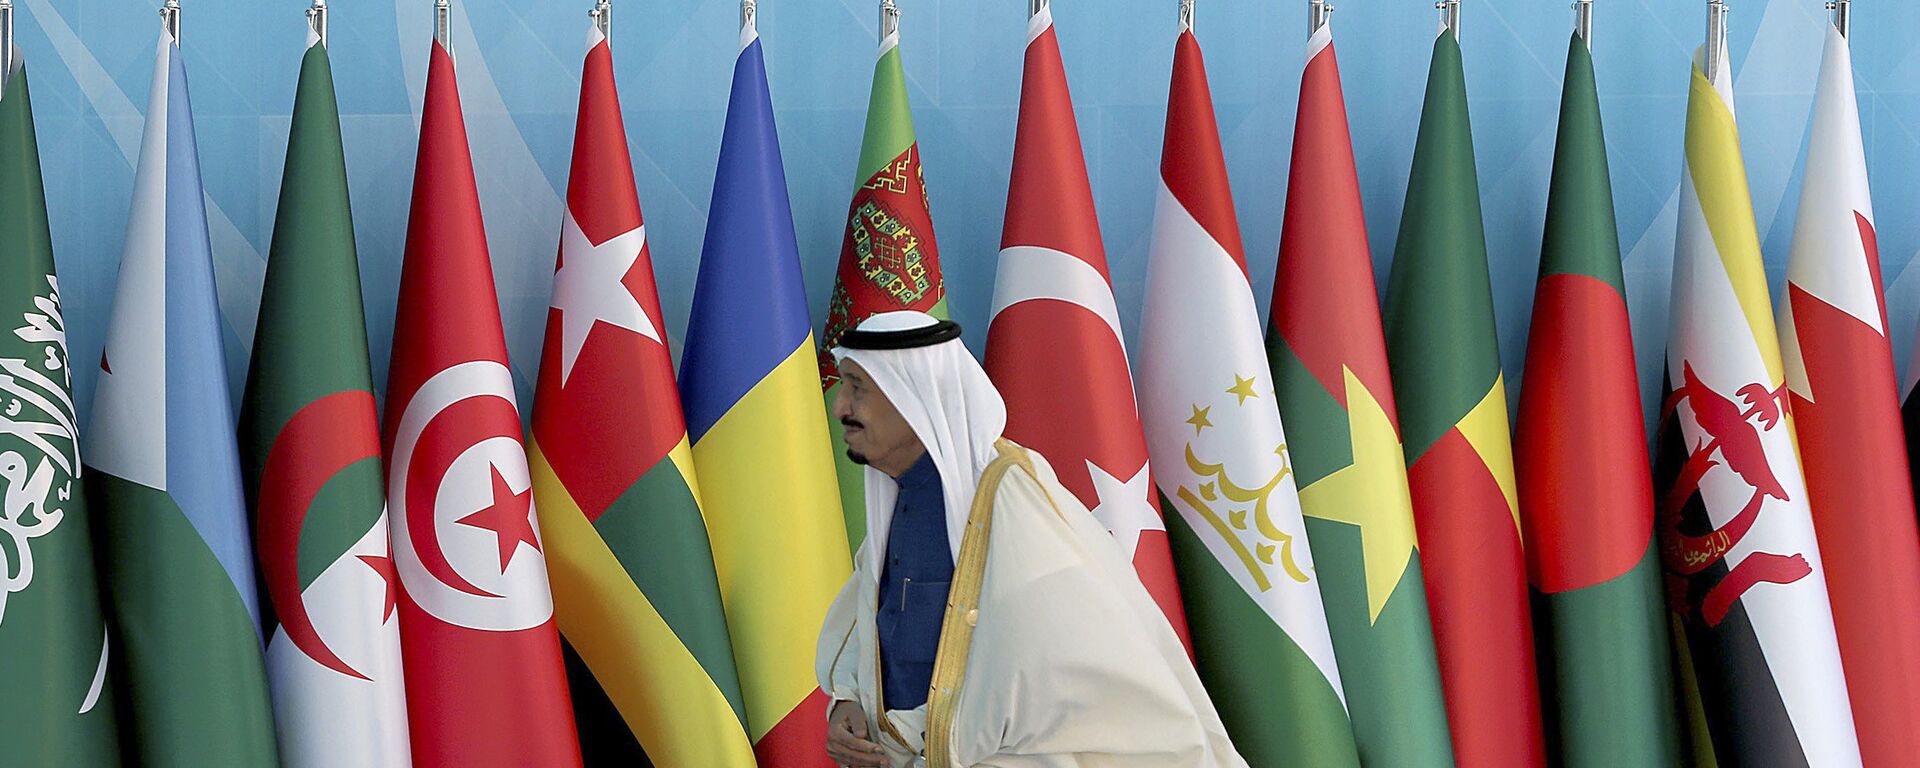 Флаги стран ОИС во время саммита в Стамбуле, 14 апреля 2016 года - Sputnik Азербайджан, 1920, 08.04.2021